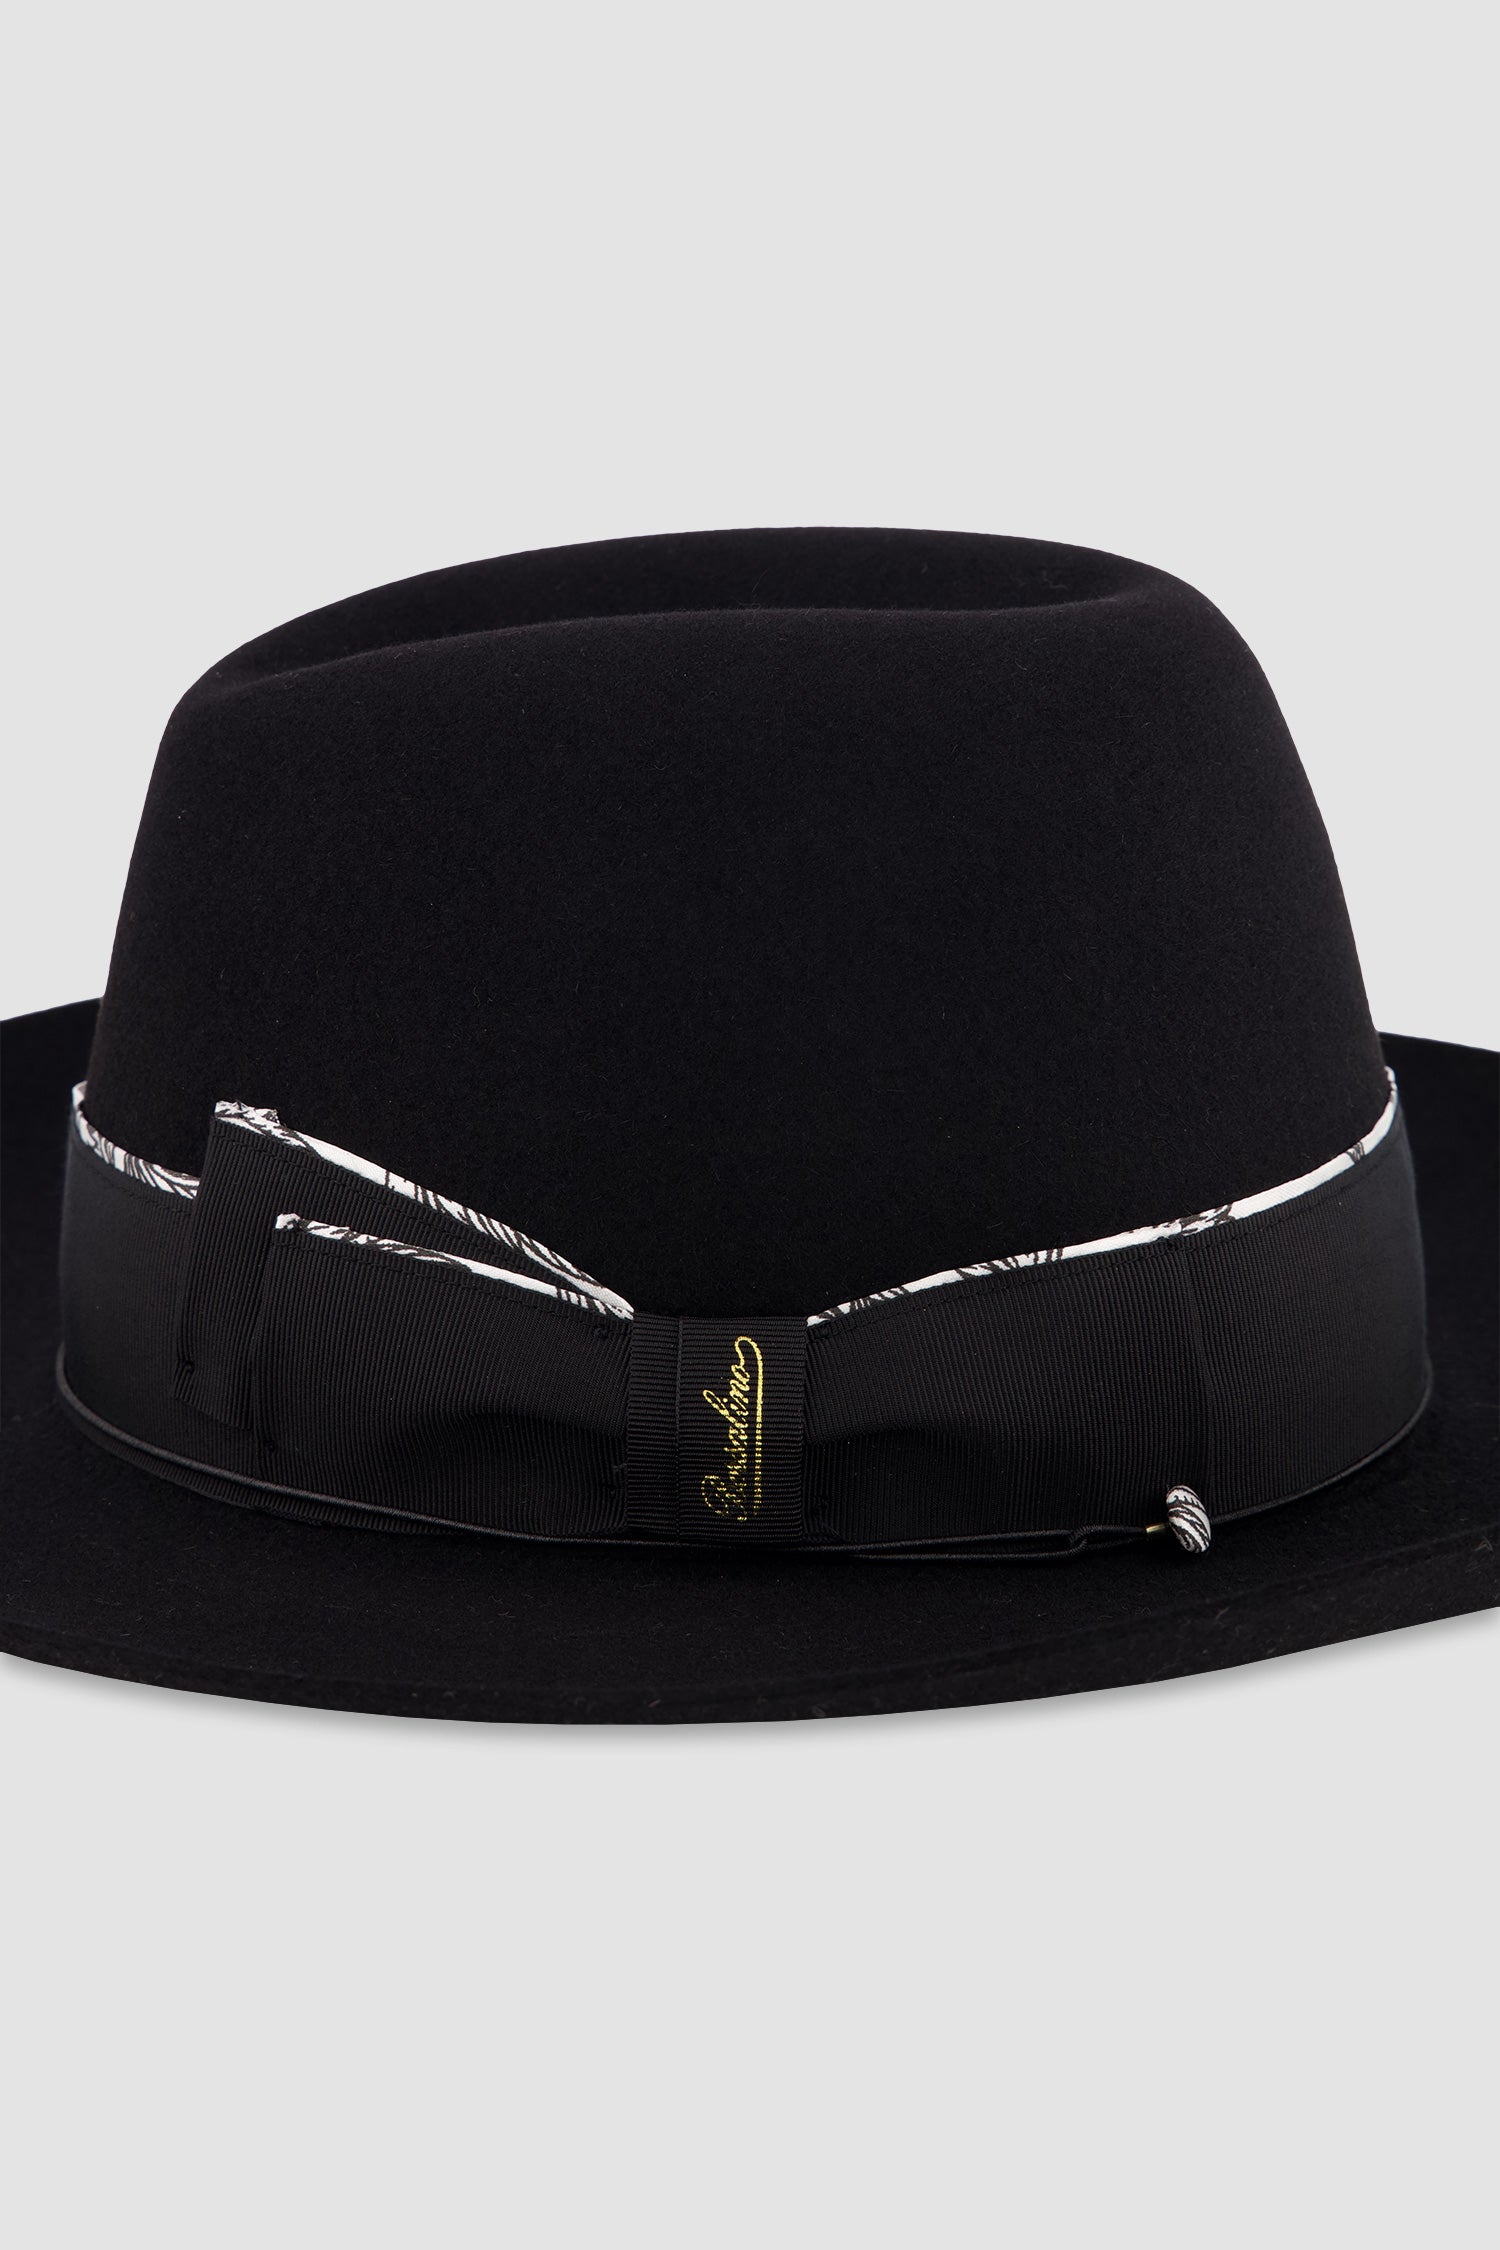 Borsalino Black Alessandria Rasato Tesa Larga Hat